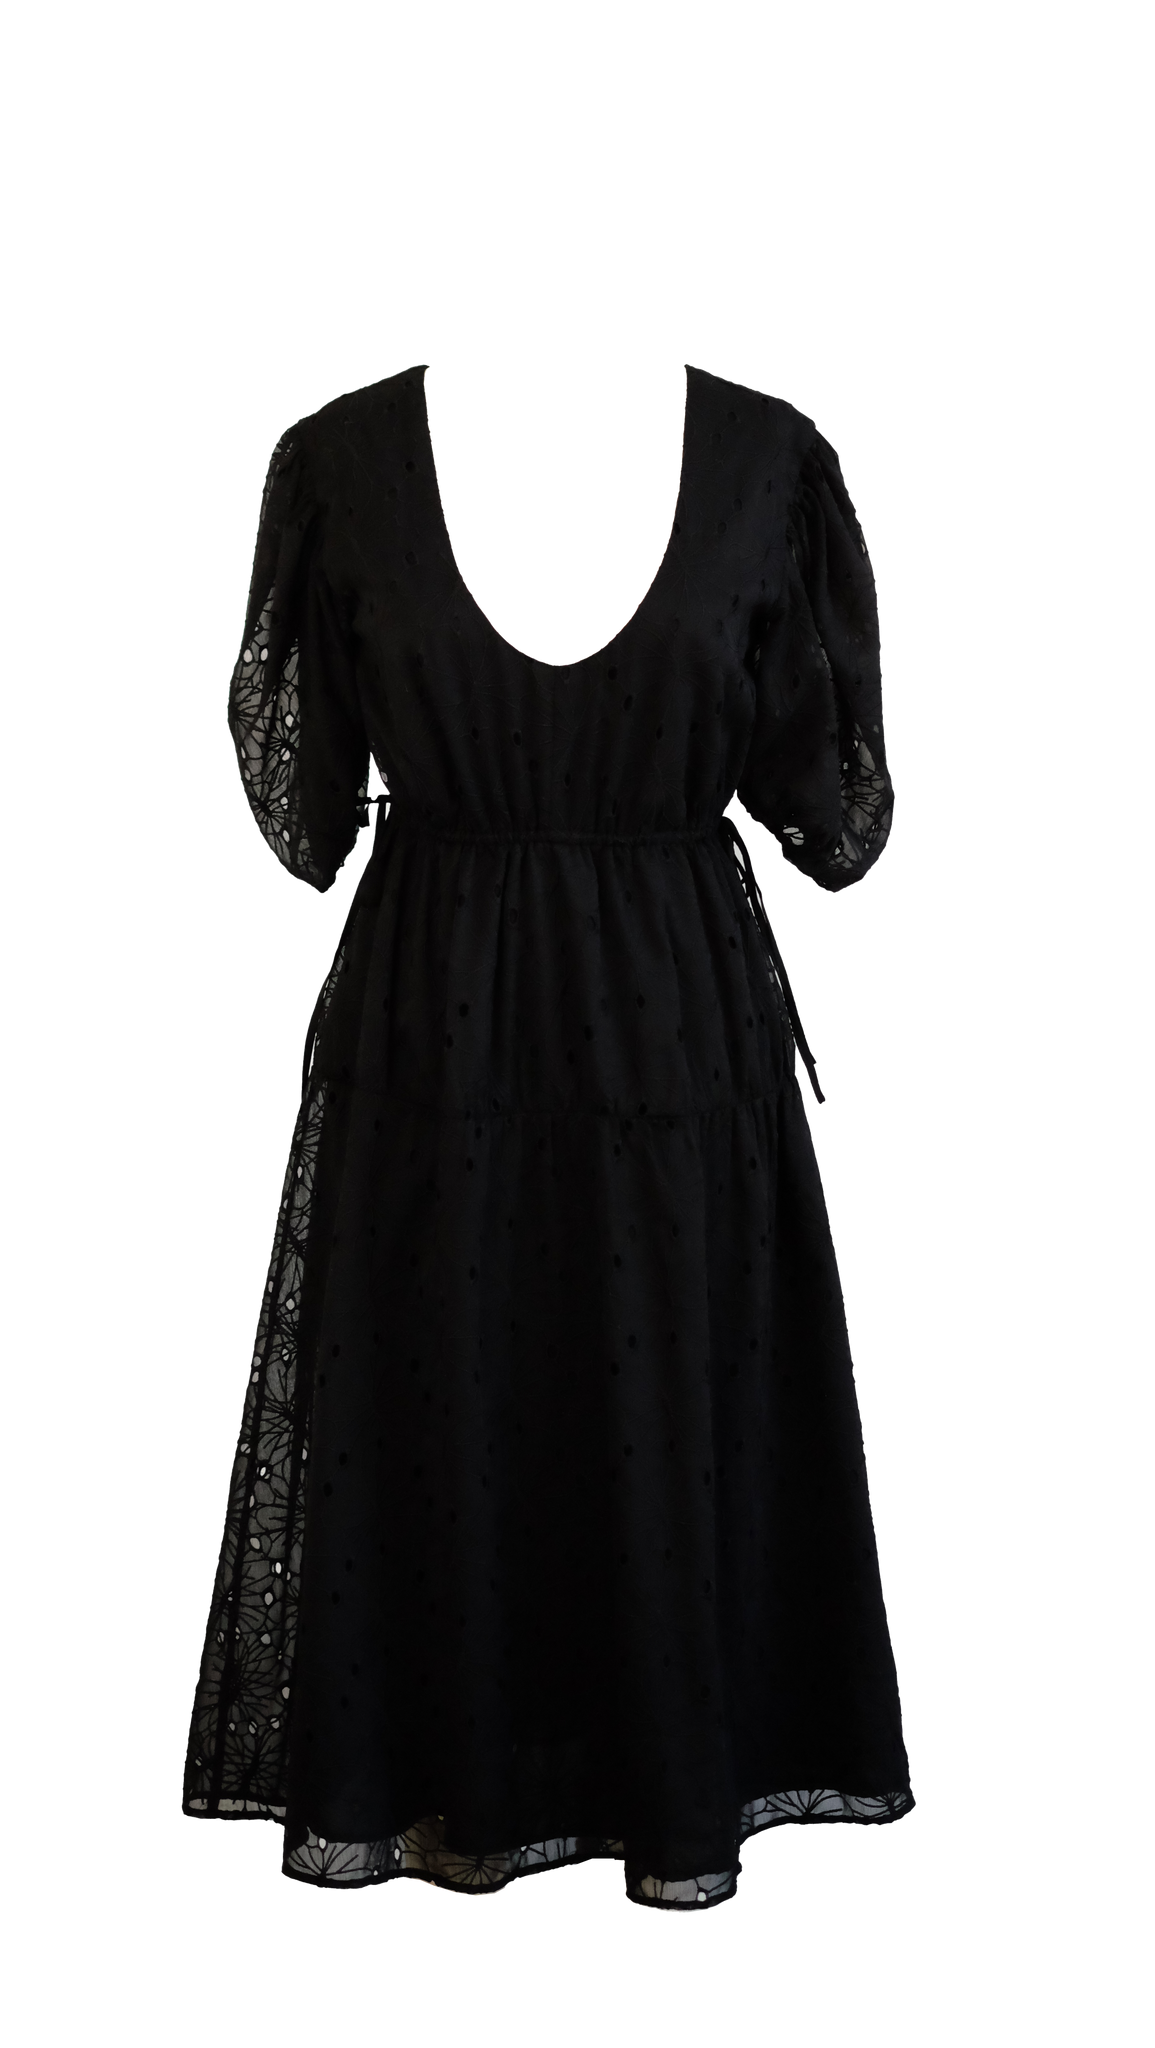 Sofala Dress in Black Chiffon Lace- Size Small SAMPLE